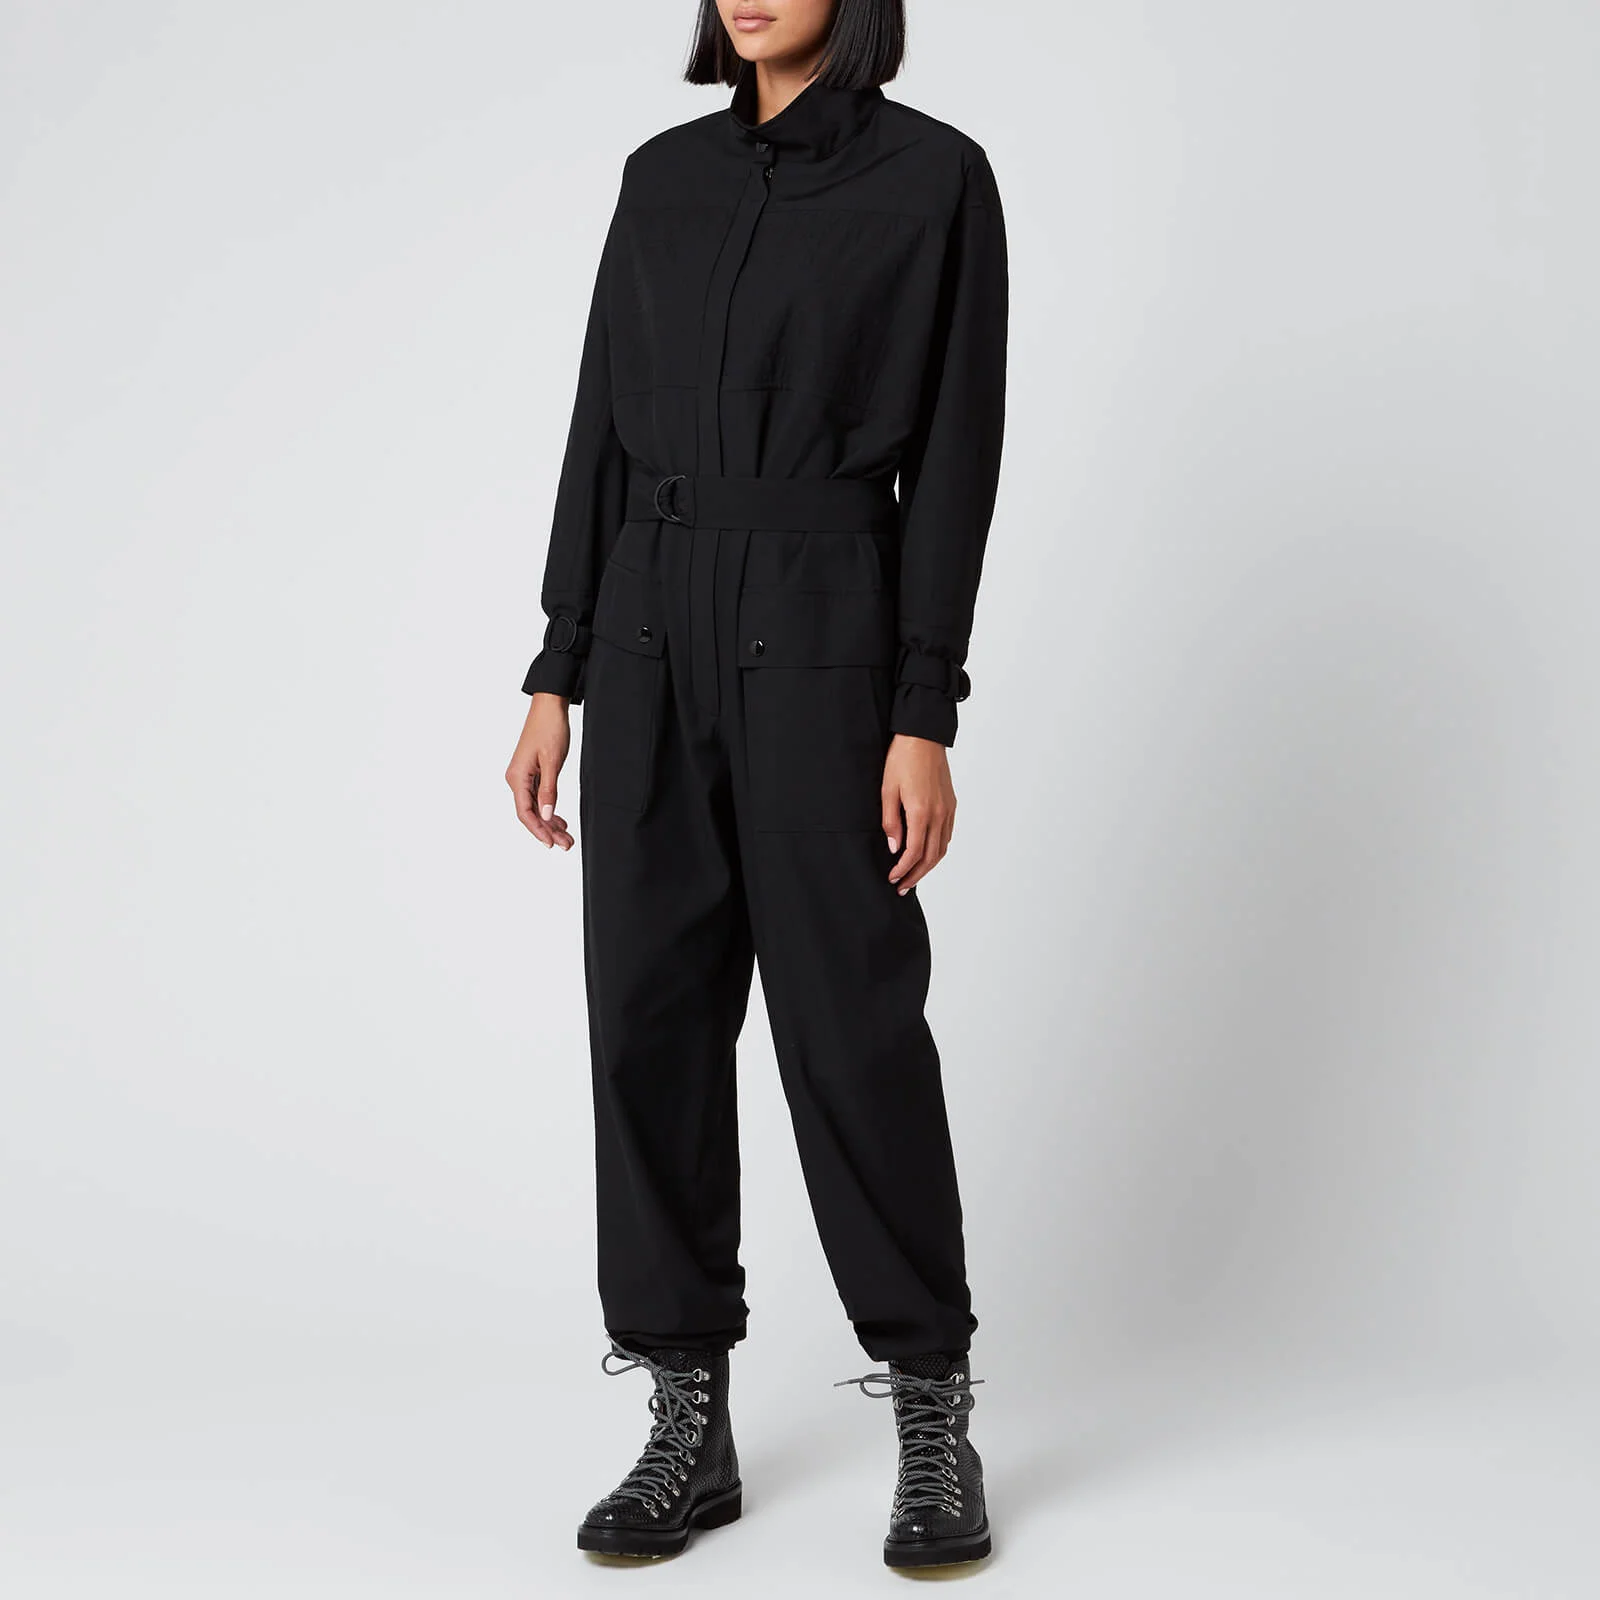 KENZO Women's Workwear Jumpsuit - Black Image 1